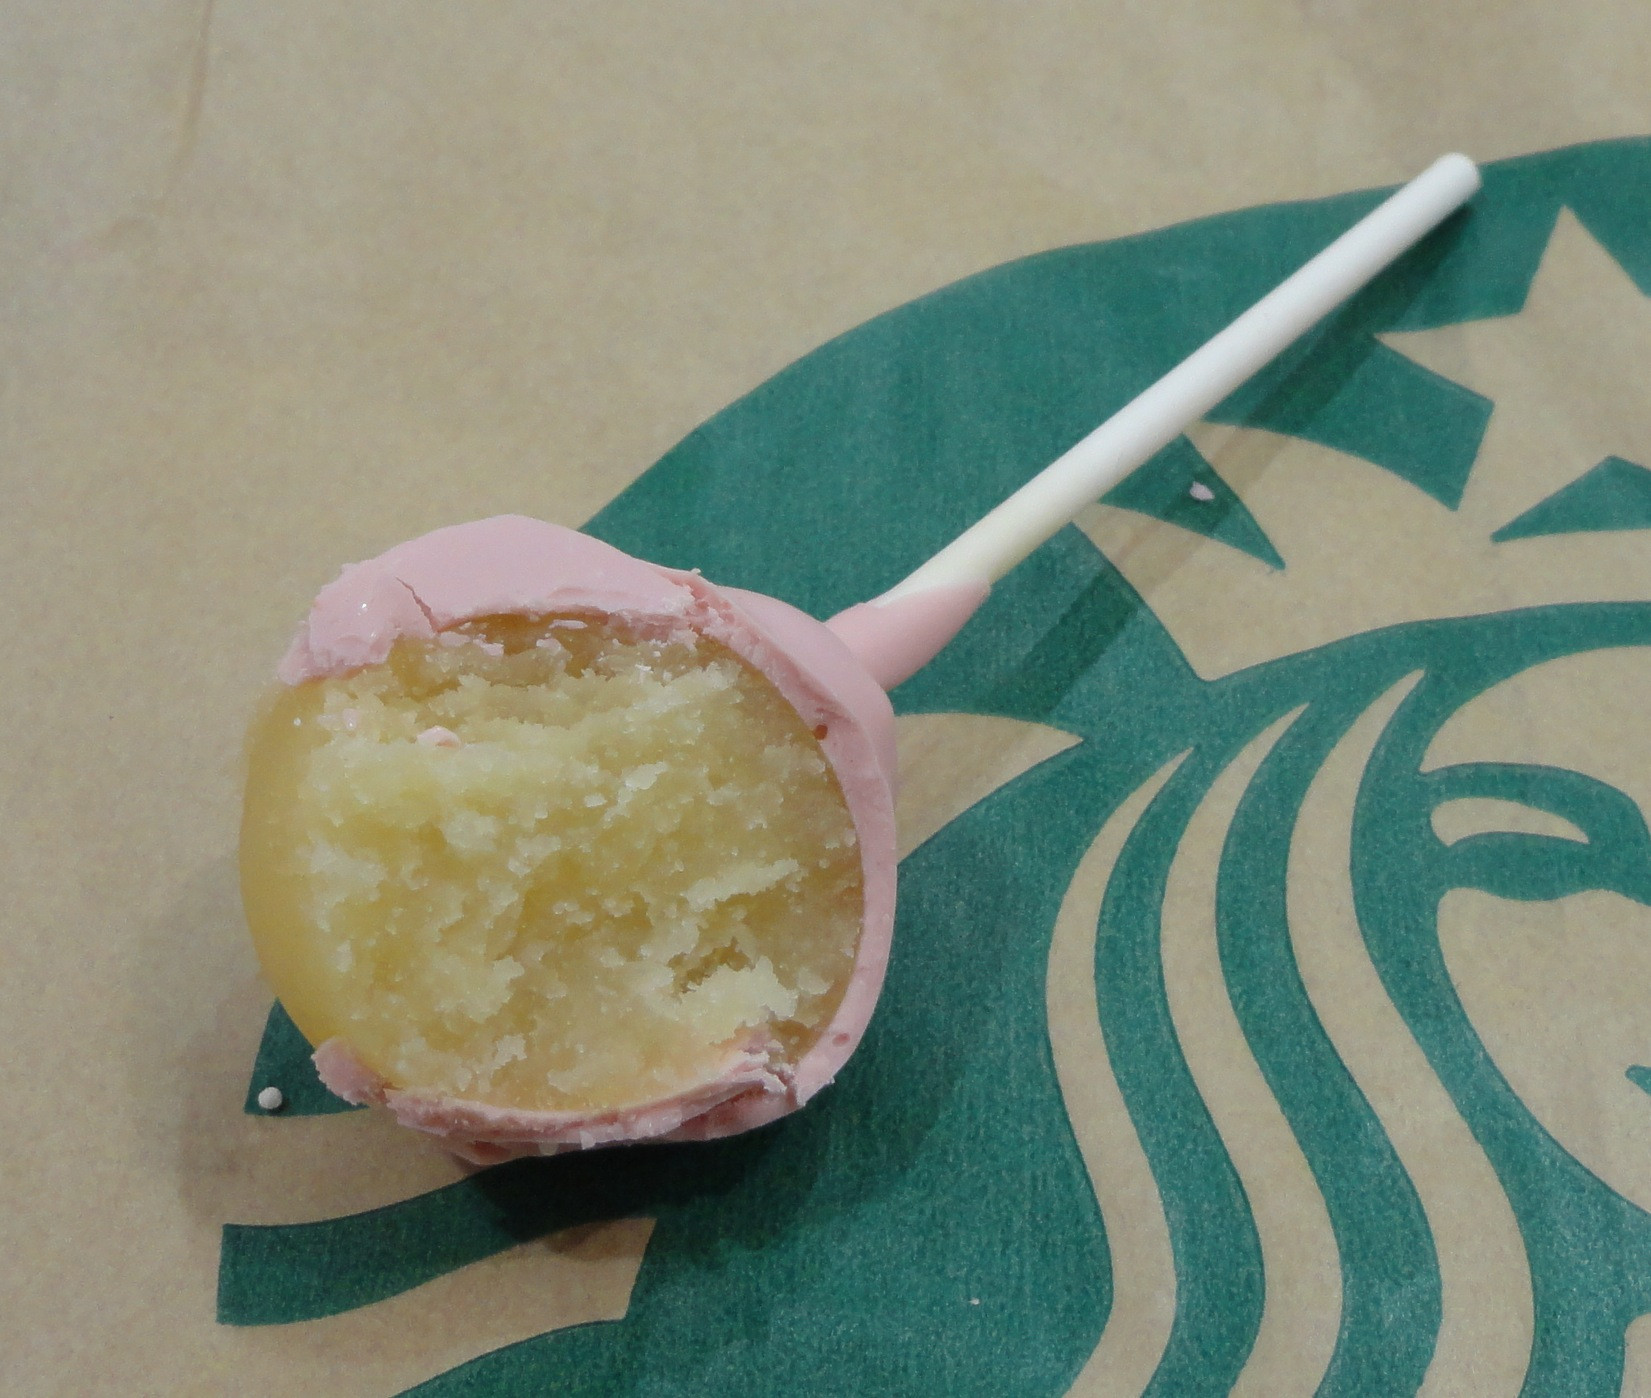 Best ideas about Starbucks Birthday Cake Pop Recipe
. Save or Pin Cake Pop Now.